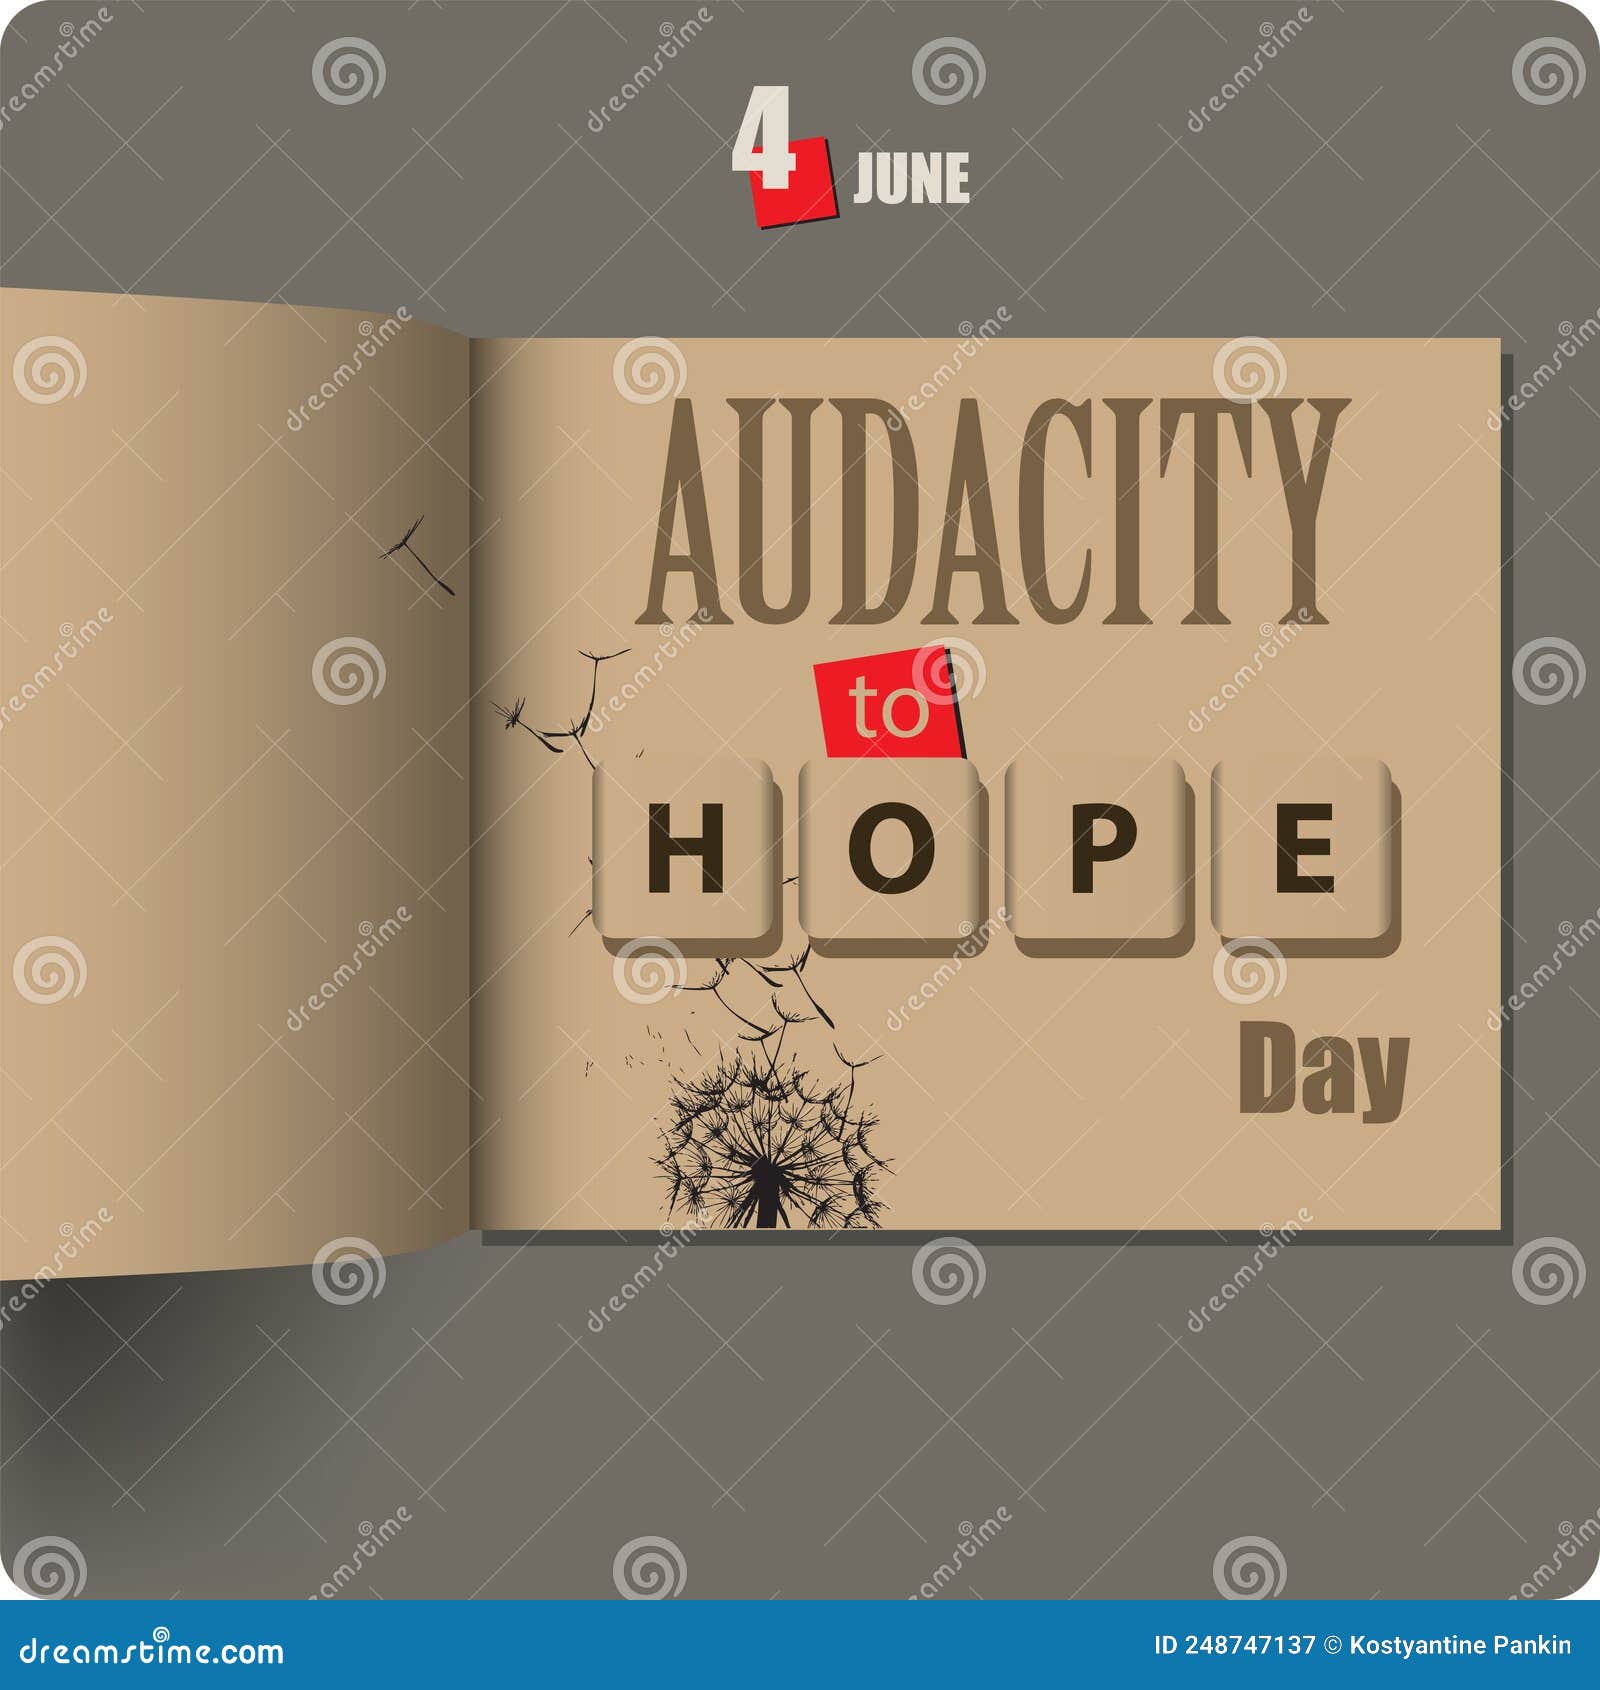 audacity to hope day